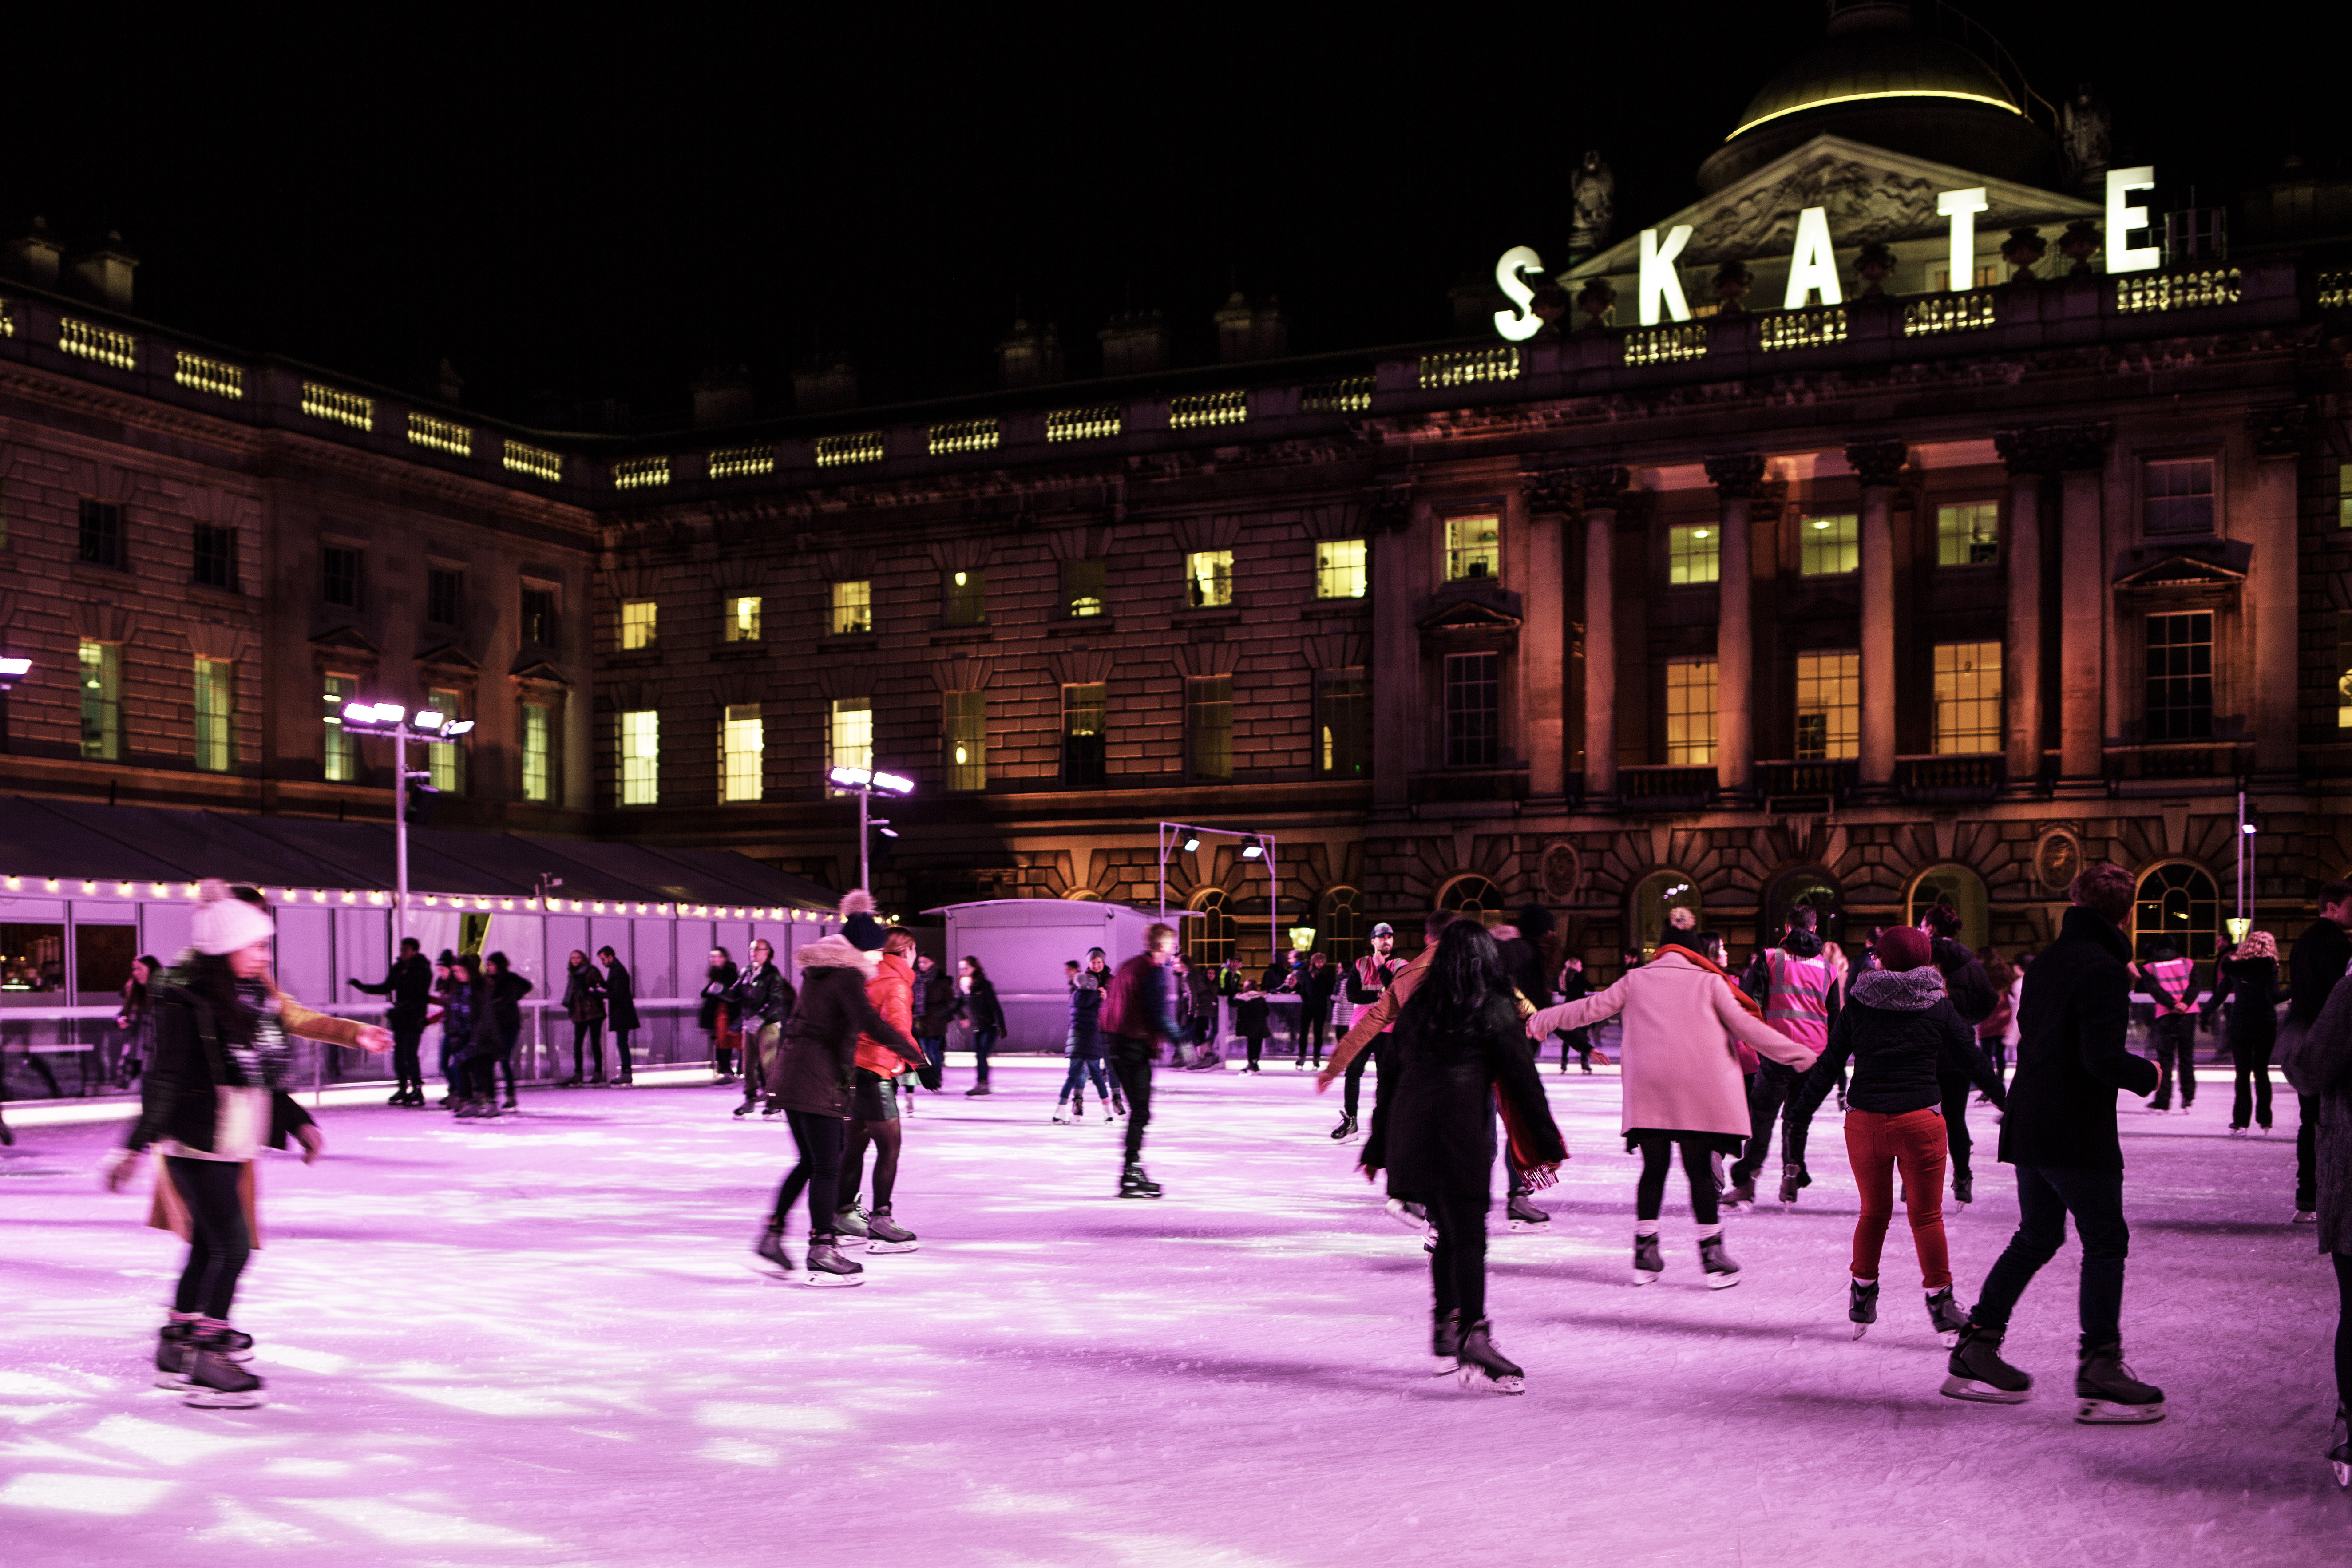 Somerset House Ice Skating